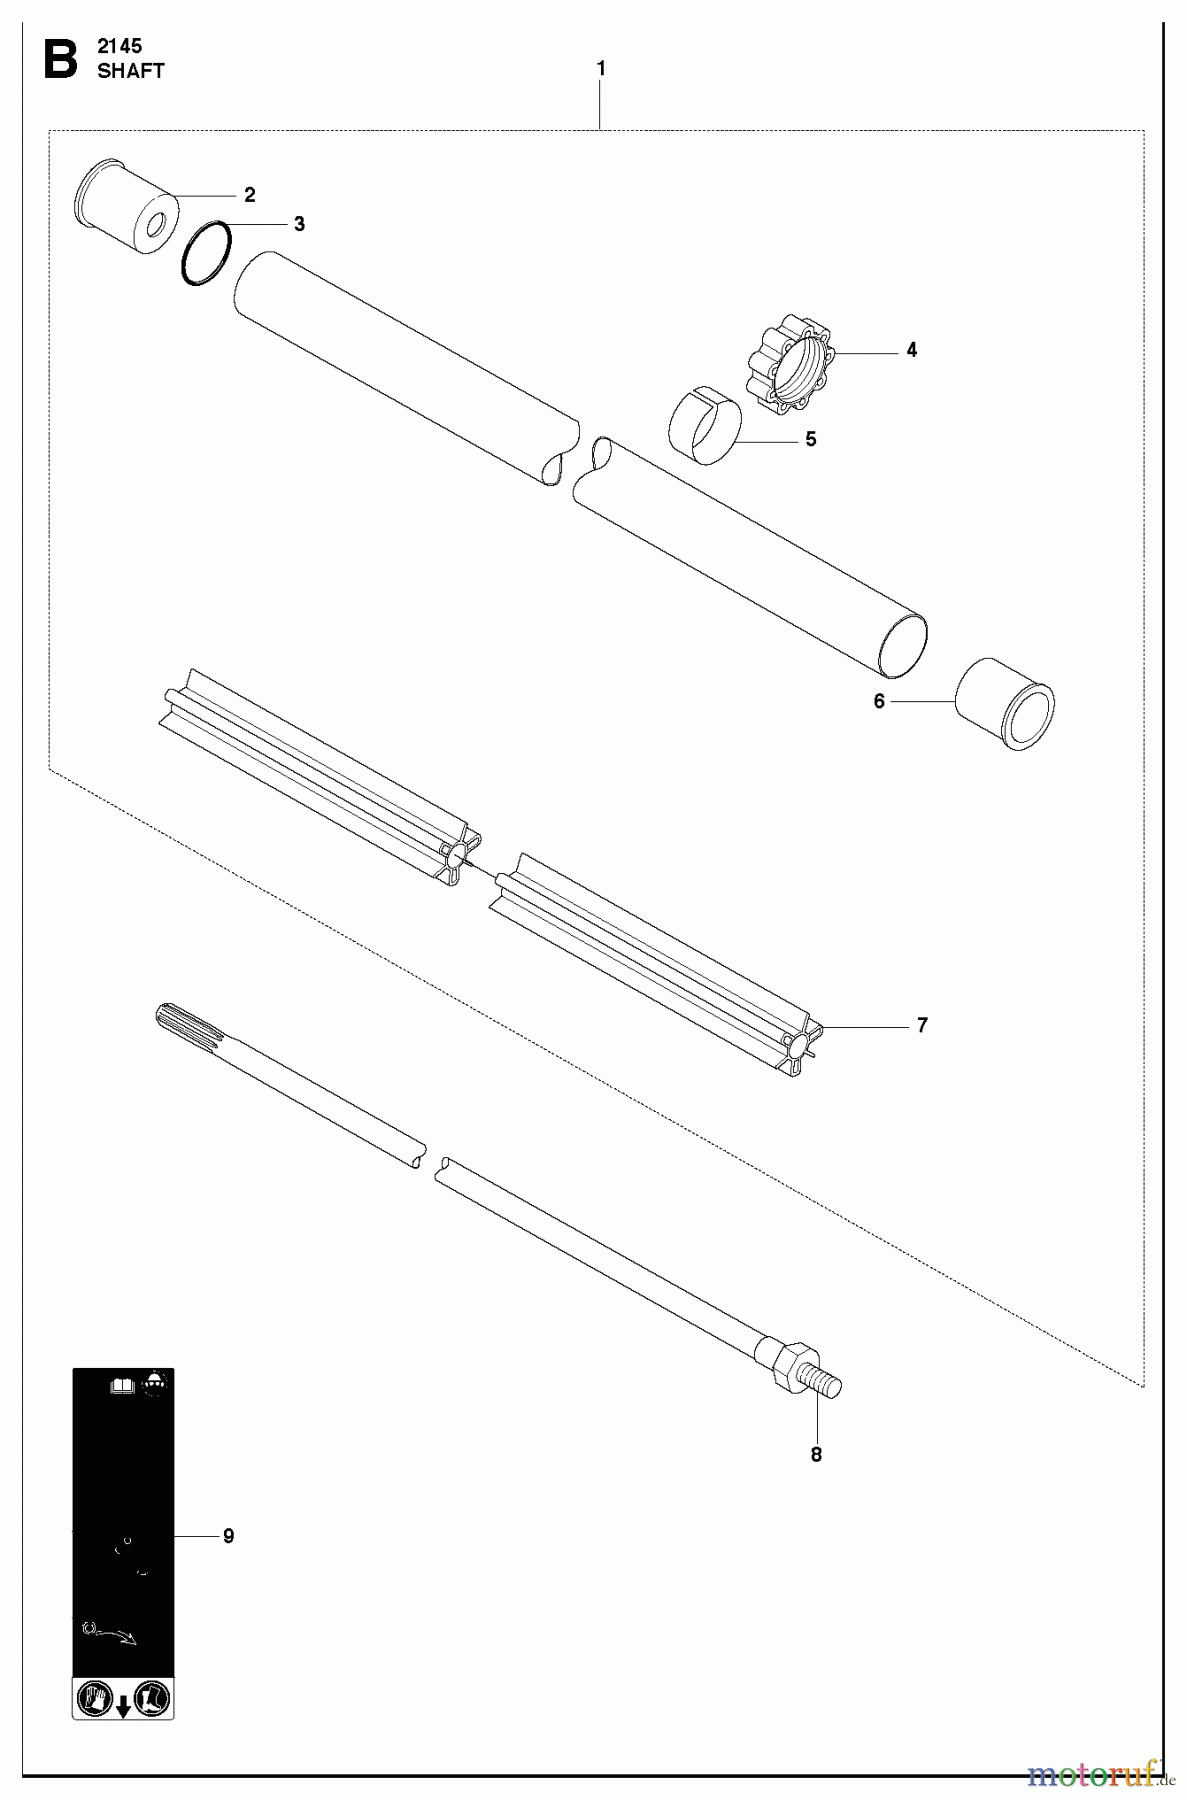  Jonsered Motorsensen, Trimmer BC2145 - Jonsered Brushcutter (2010-09) SHAFT